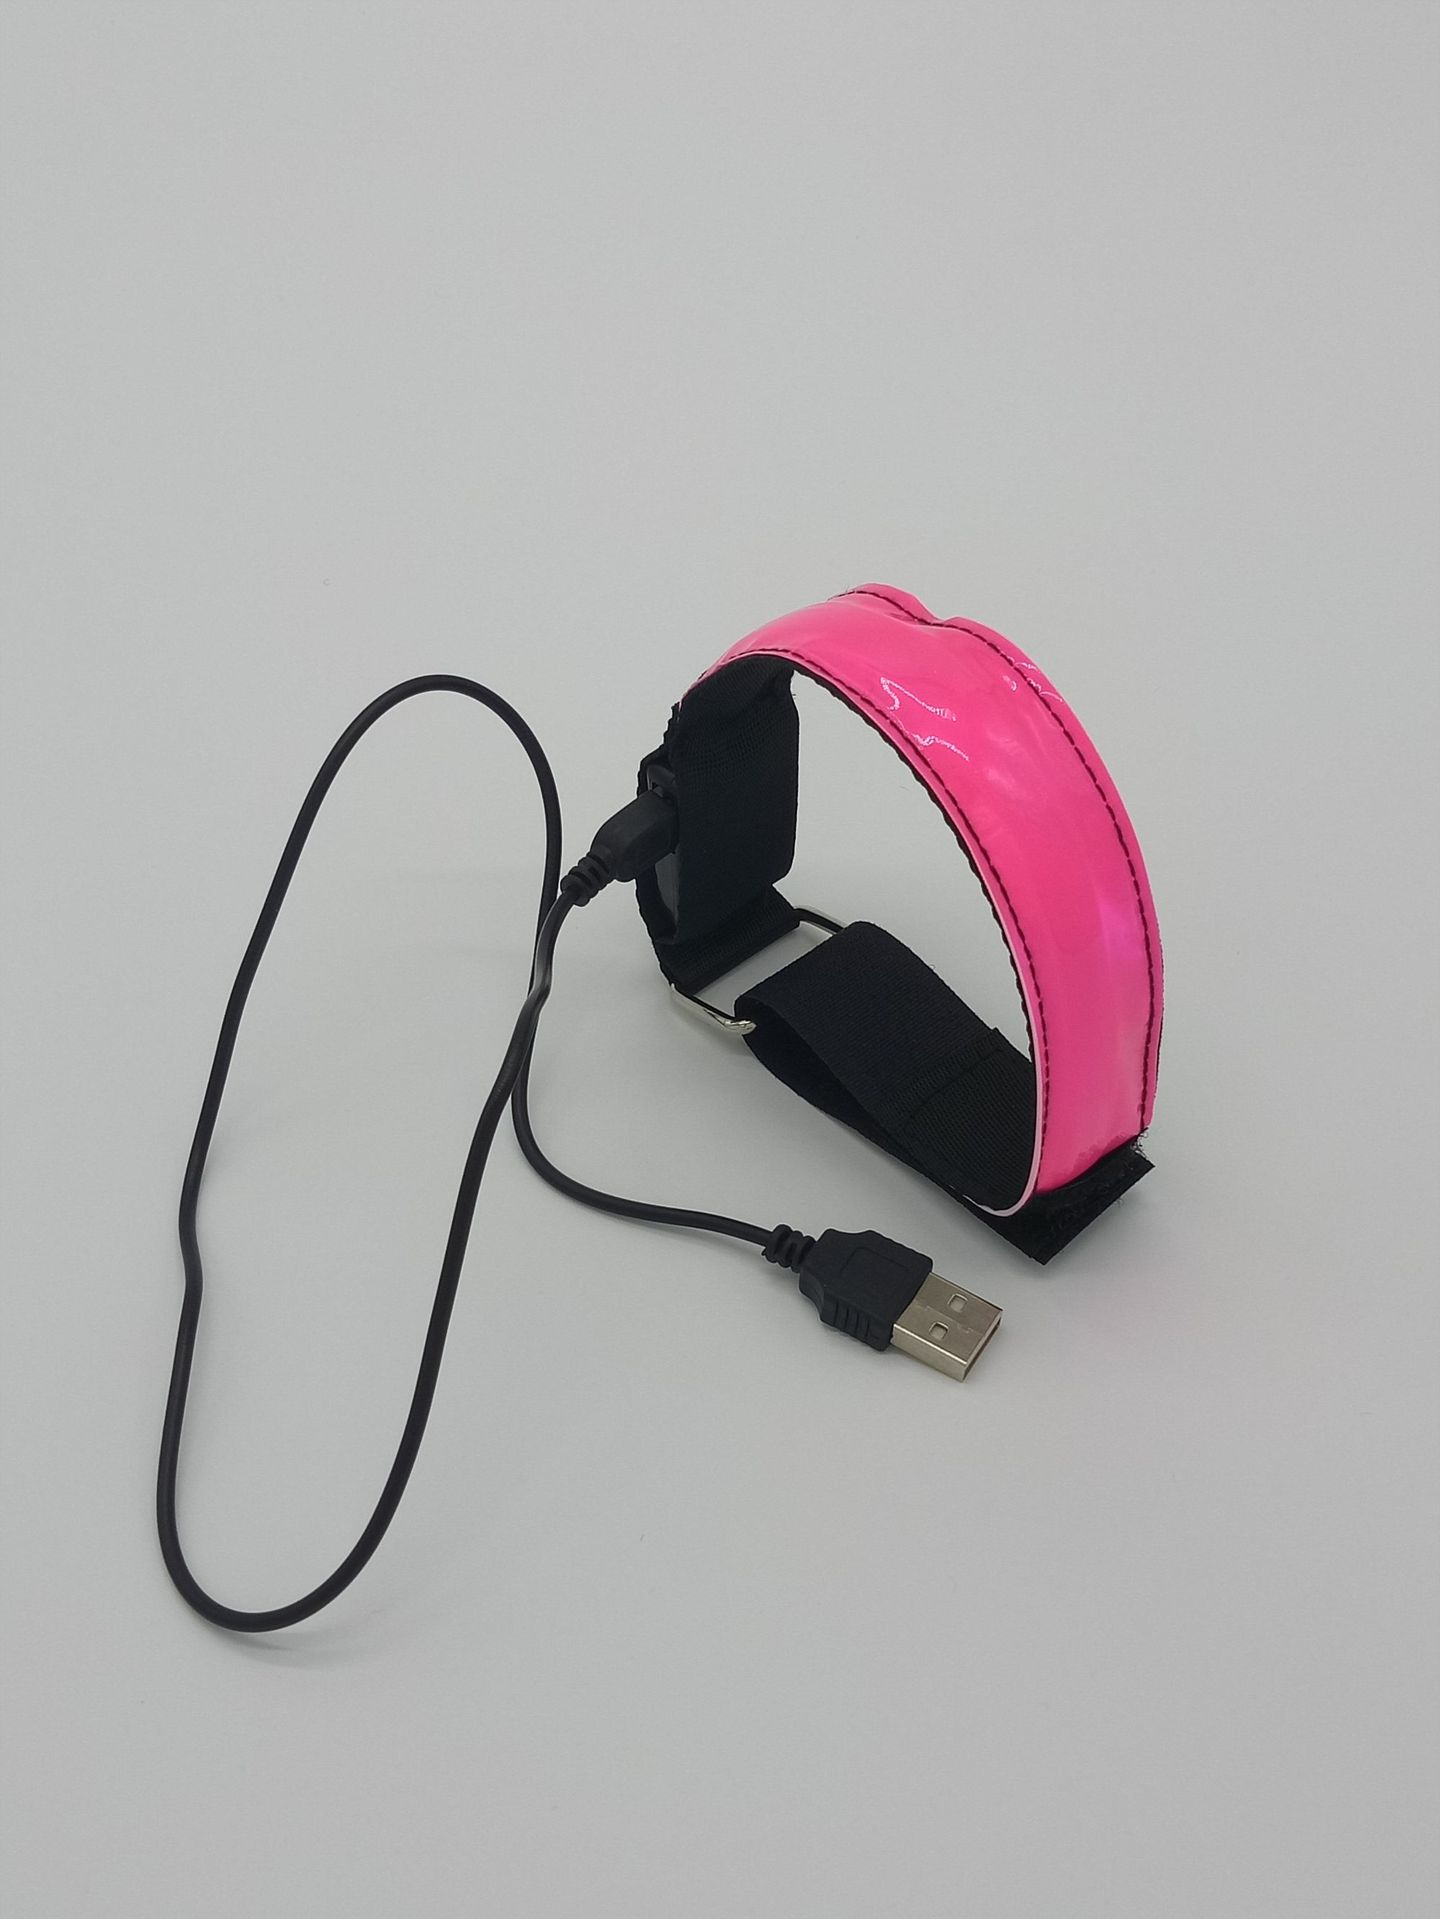 Brazalete Luminoso LED con Carga USB